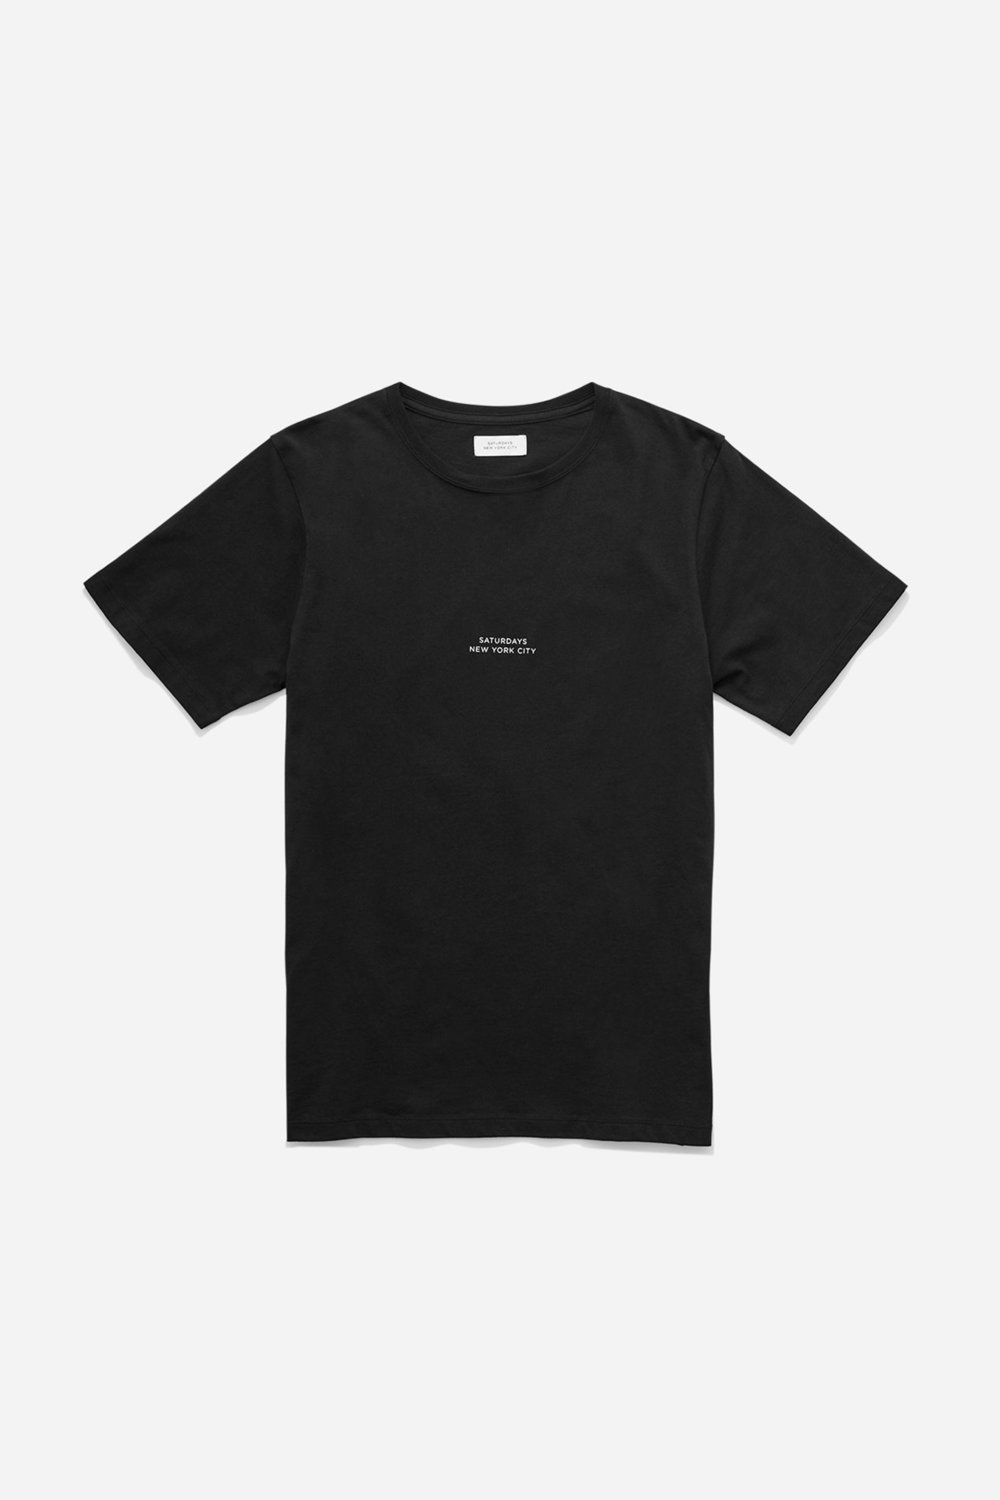 gotham chest t-shirt black.jpg